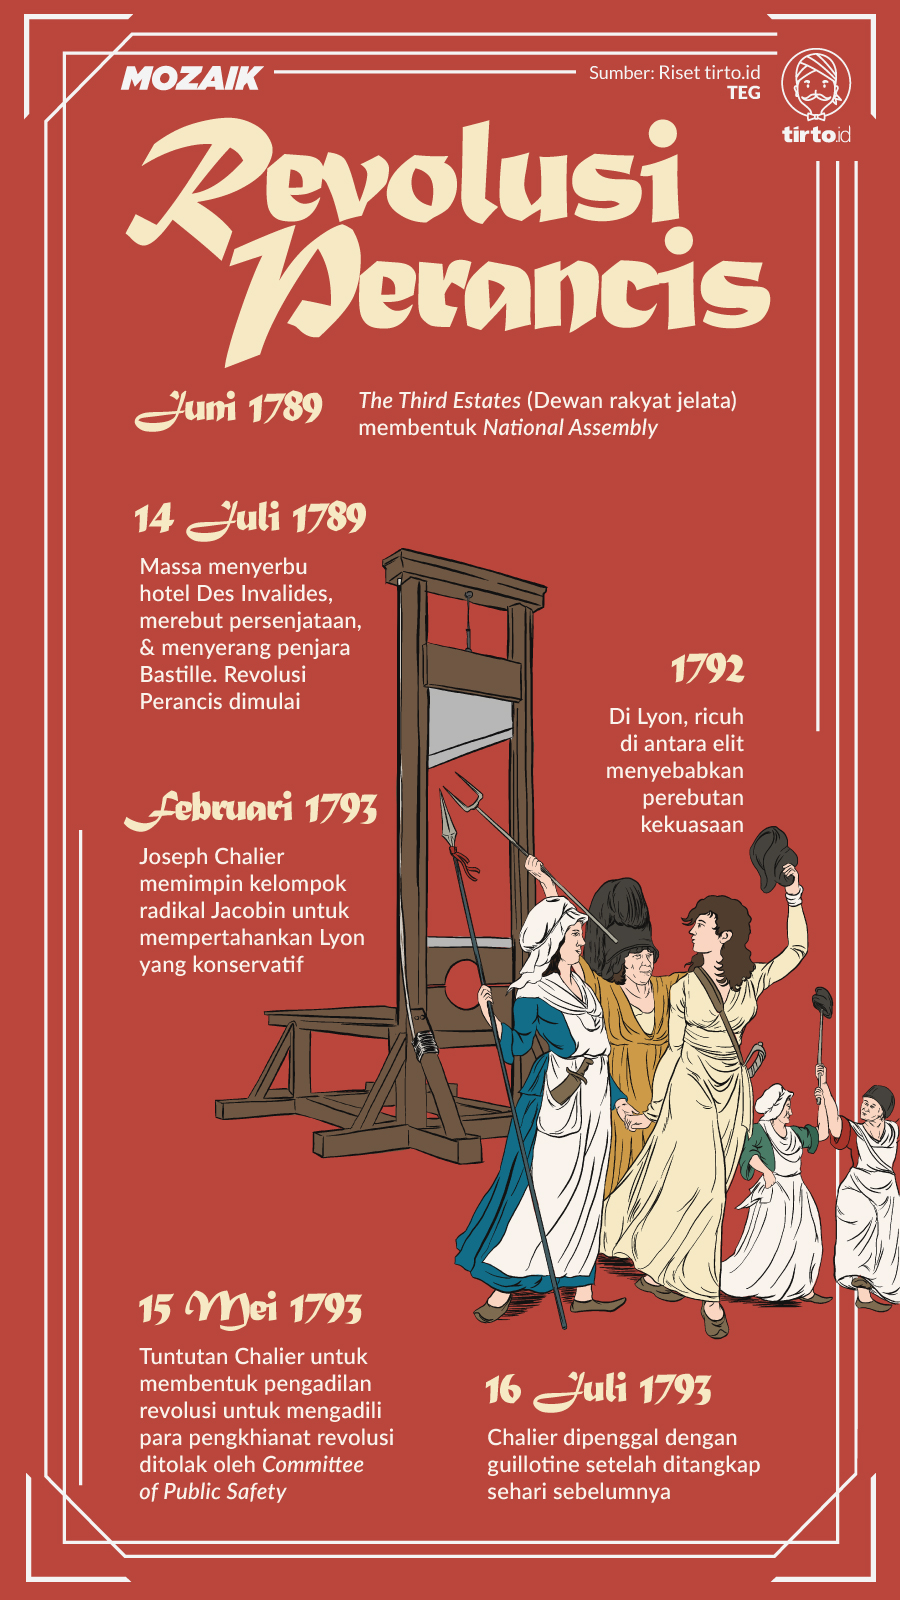 Infografik Mozaik Revolusi Perancis